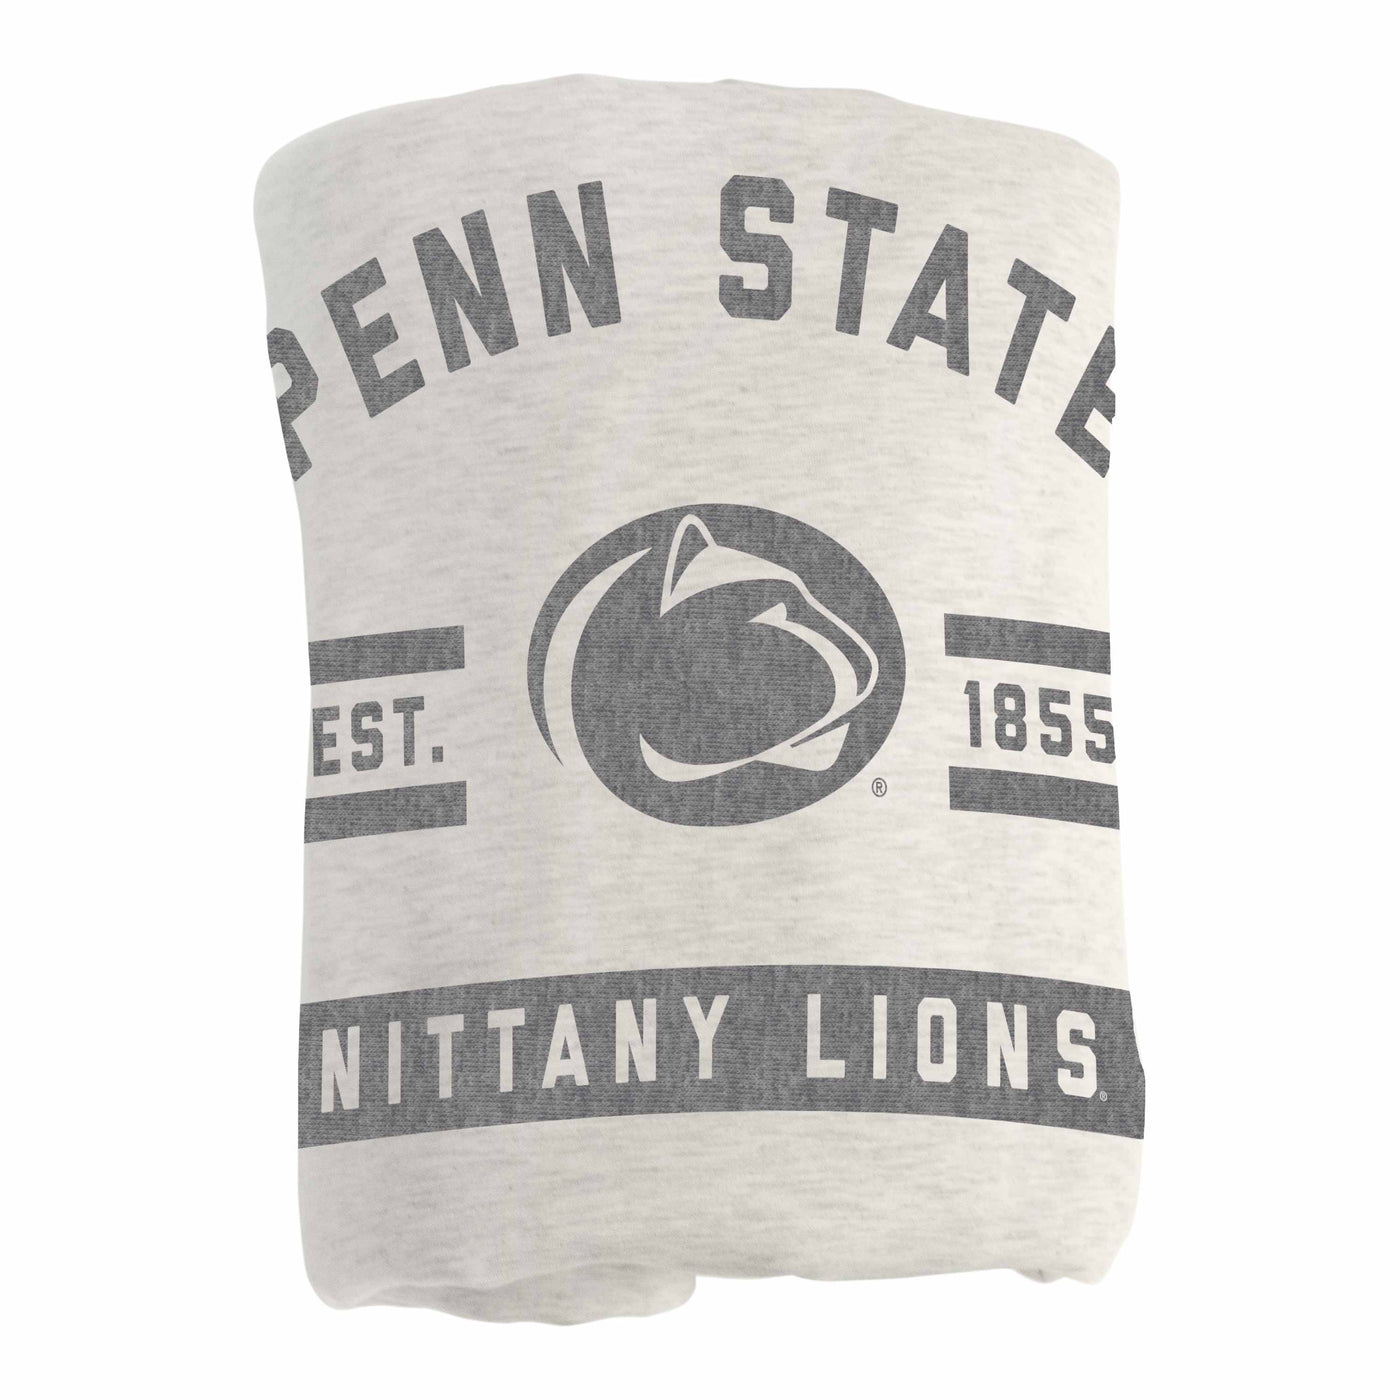 Penn State Oatmeal Sweatshirt Blanket